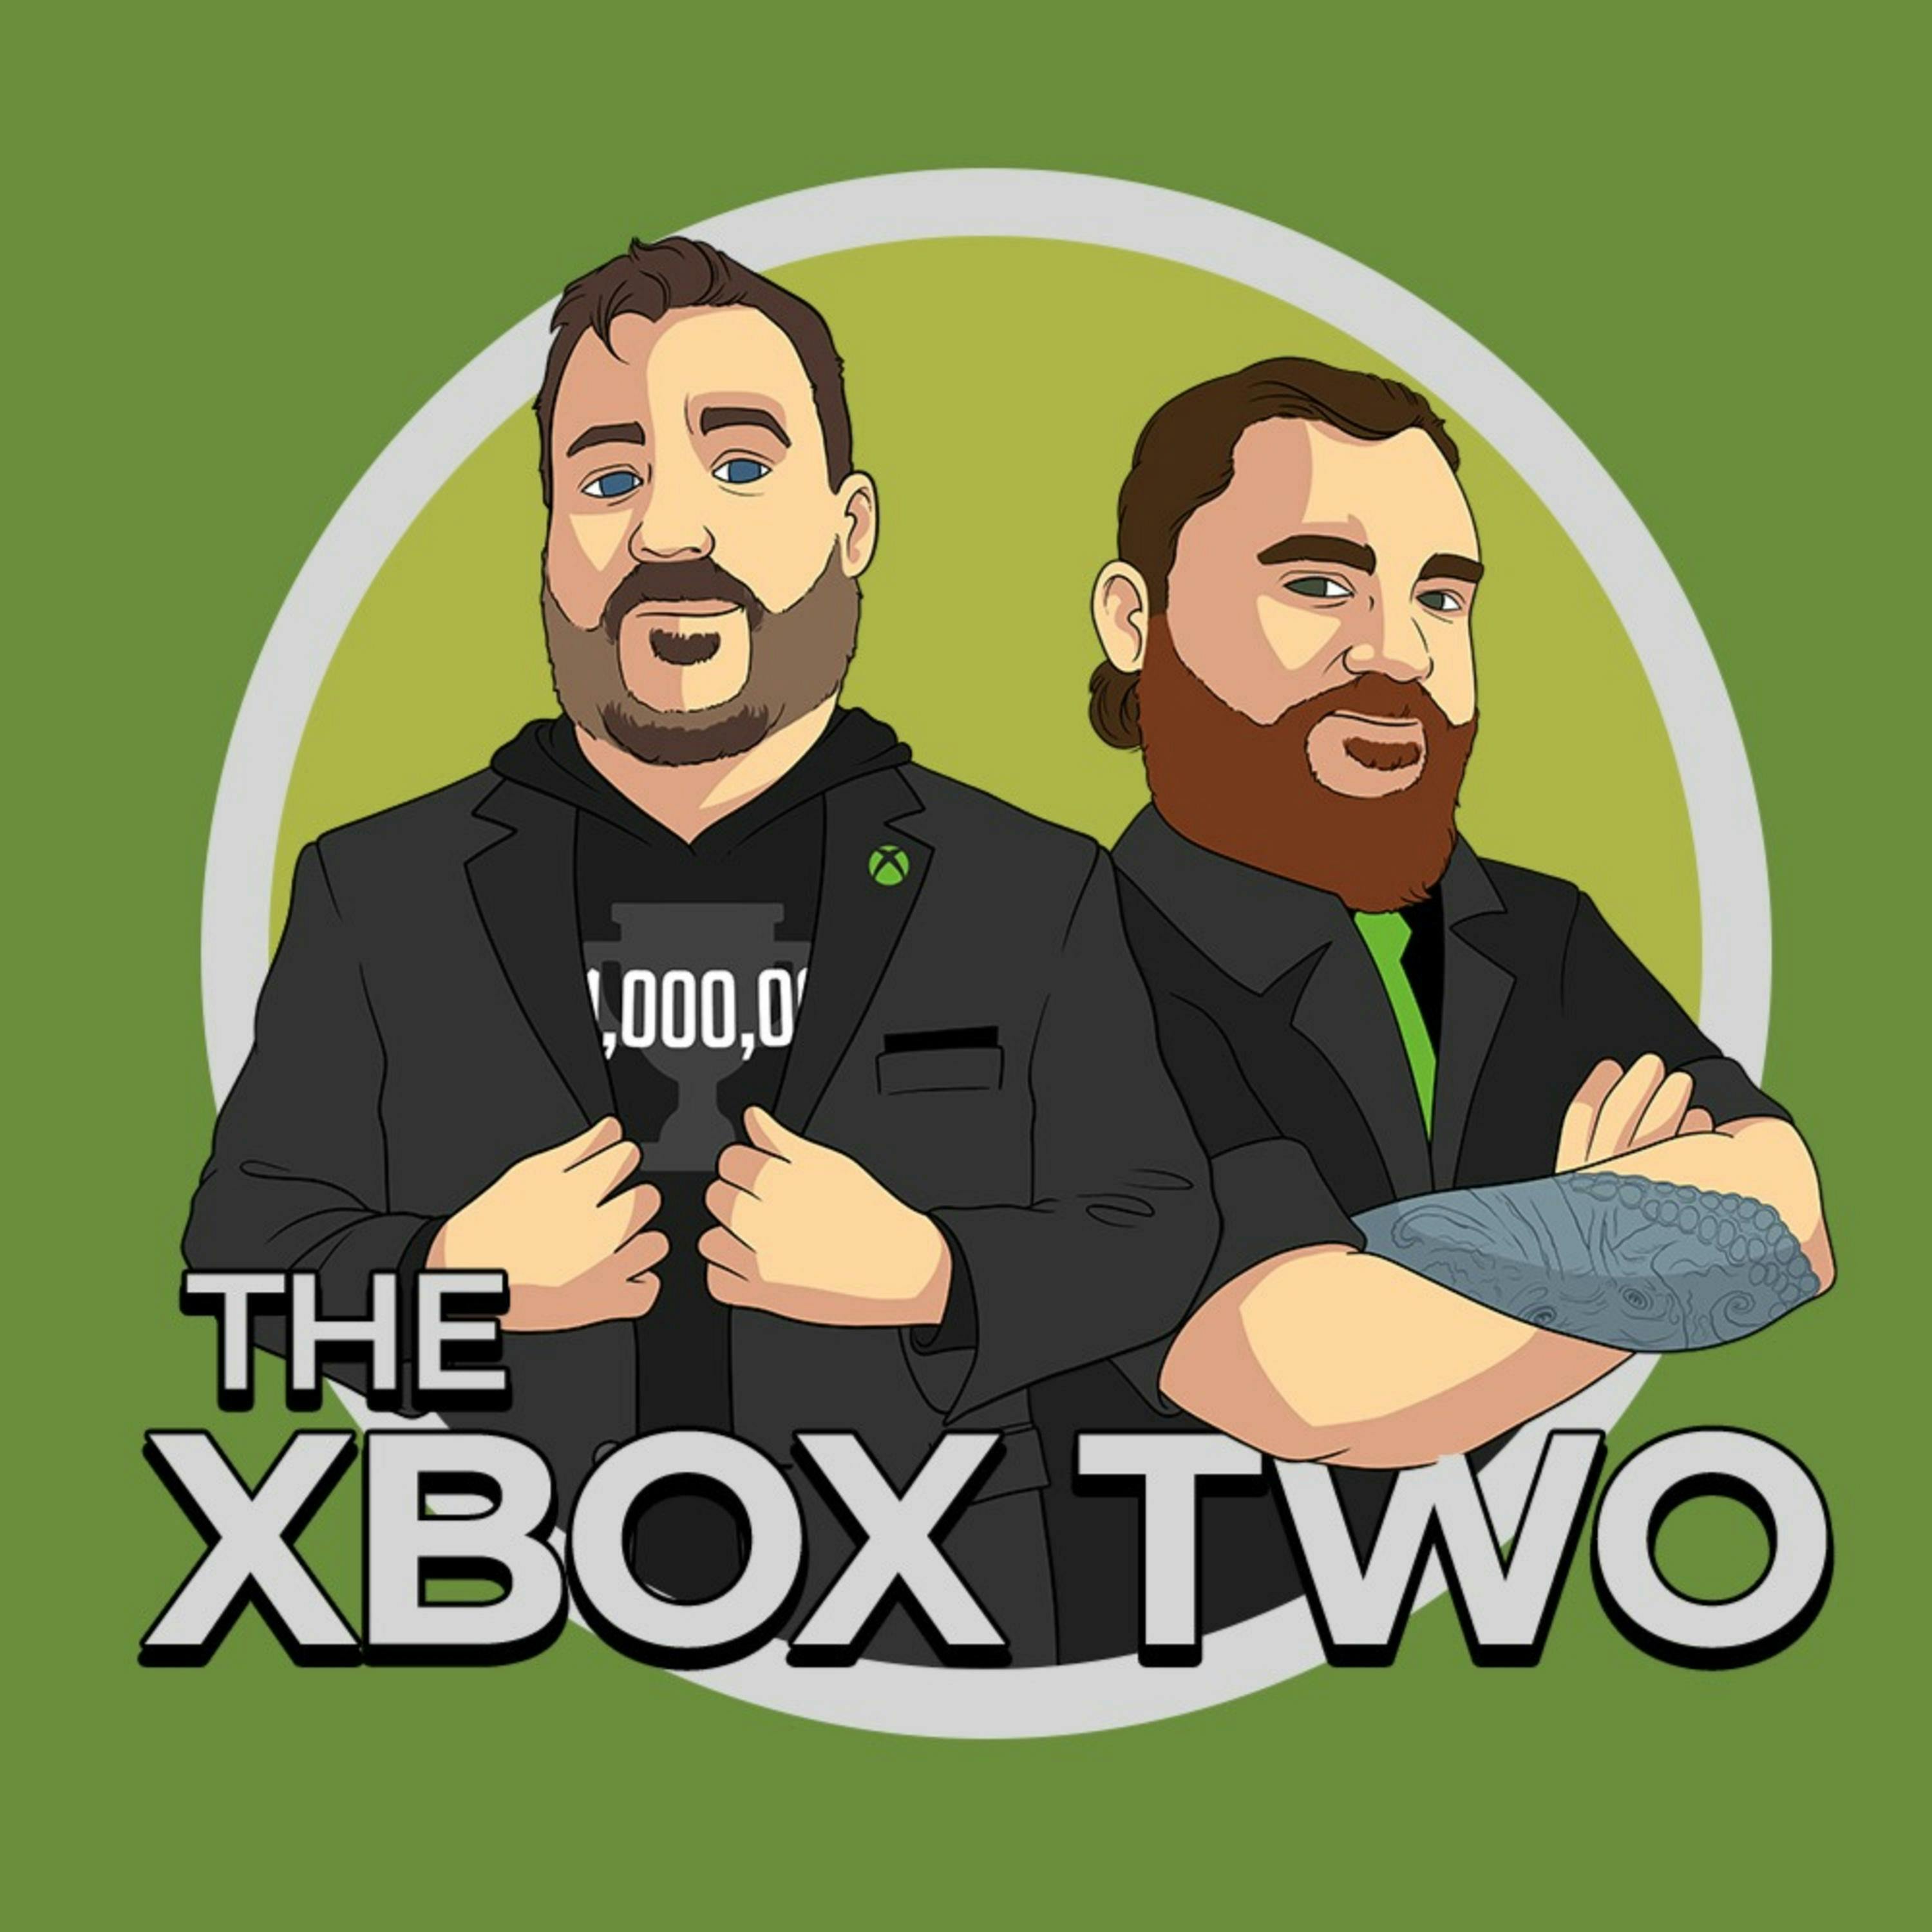 Xbox E3 2021 big rumors, more studio acquisitions? Mayo on fries?!